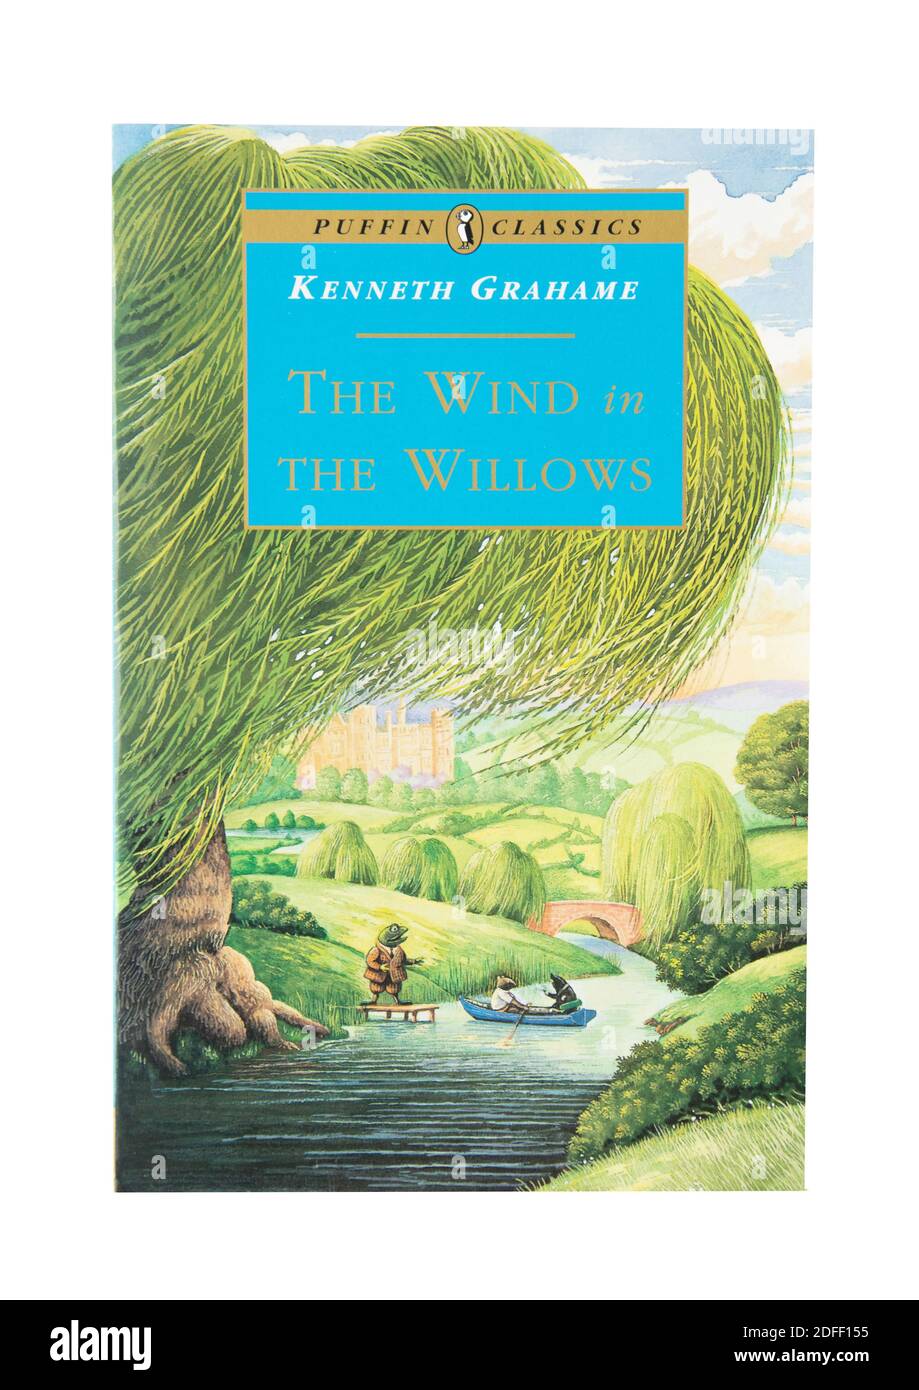 The Wind in the Willows, livre pour enfants classique de Kenneth Grahame, Grand Londres, Angleterre, Royaume-Uni Banque D'Images